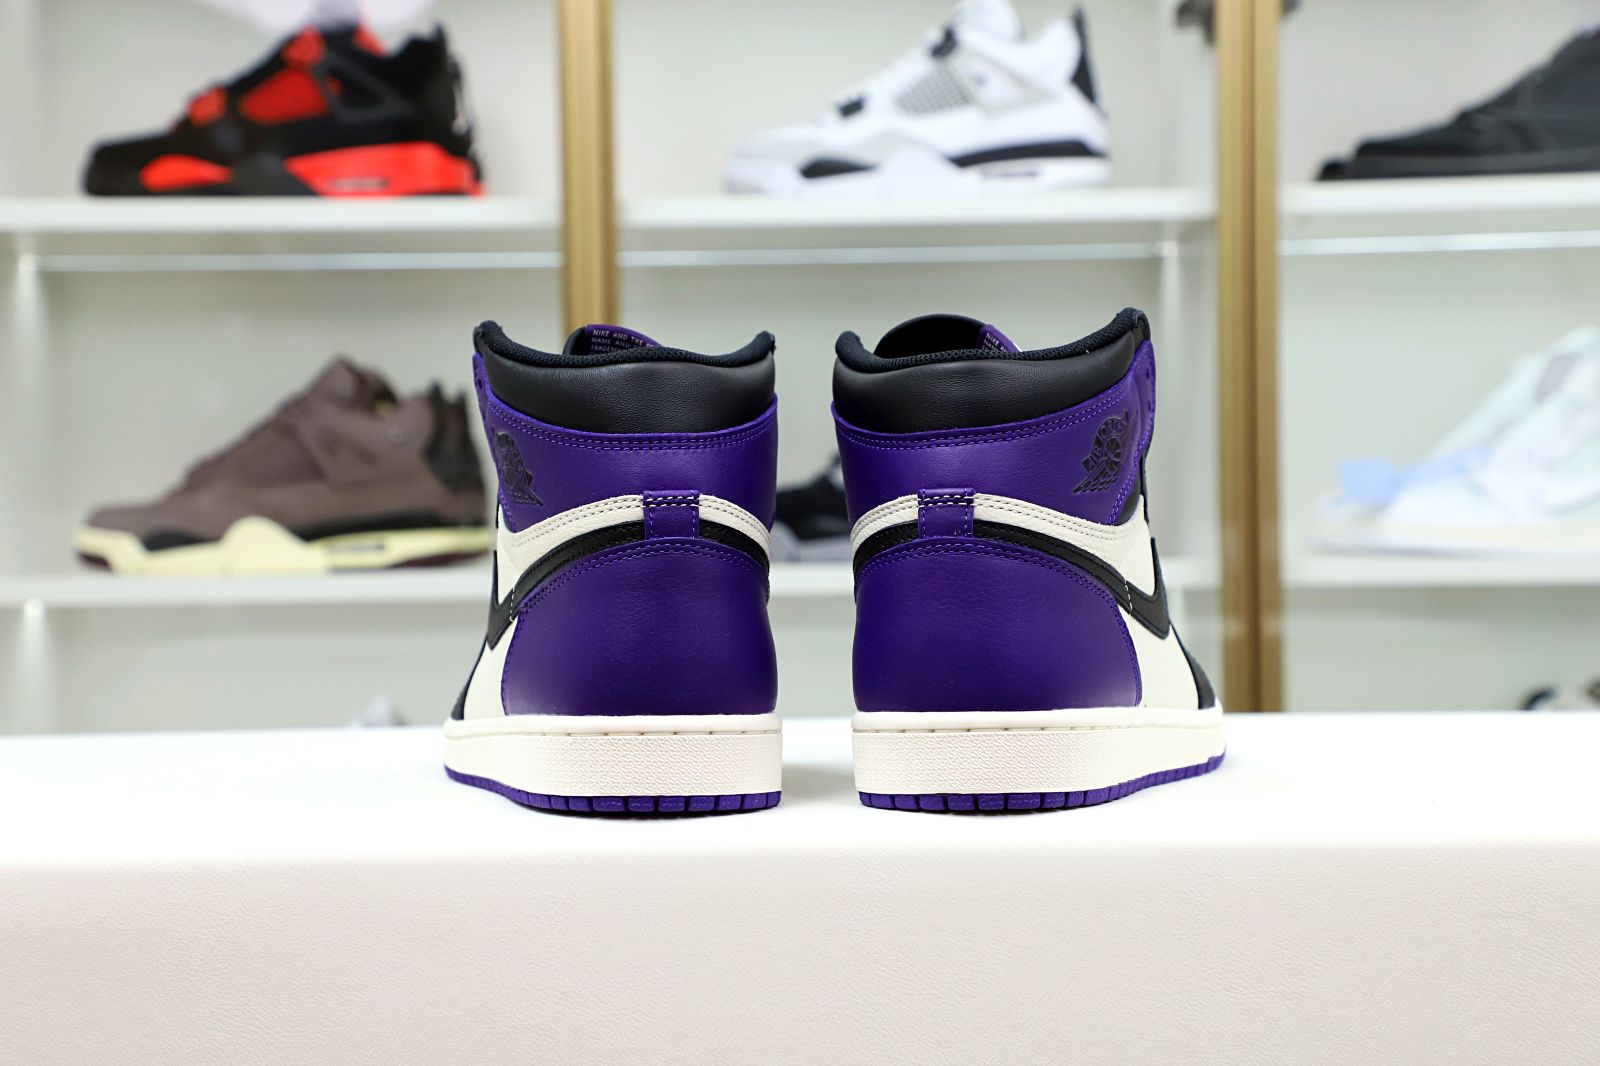 Jordan Air Jordan 1 Retro High OG “Court Purple” - 555088-501